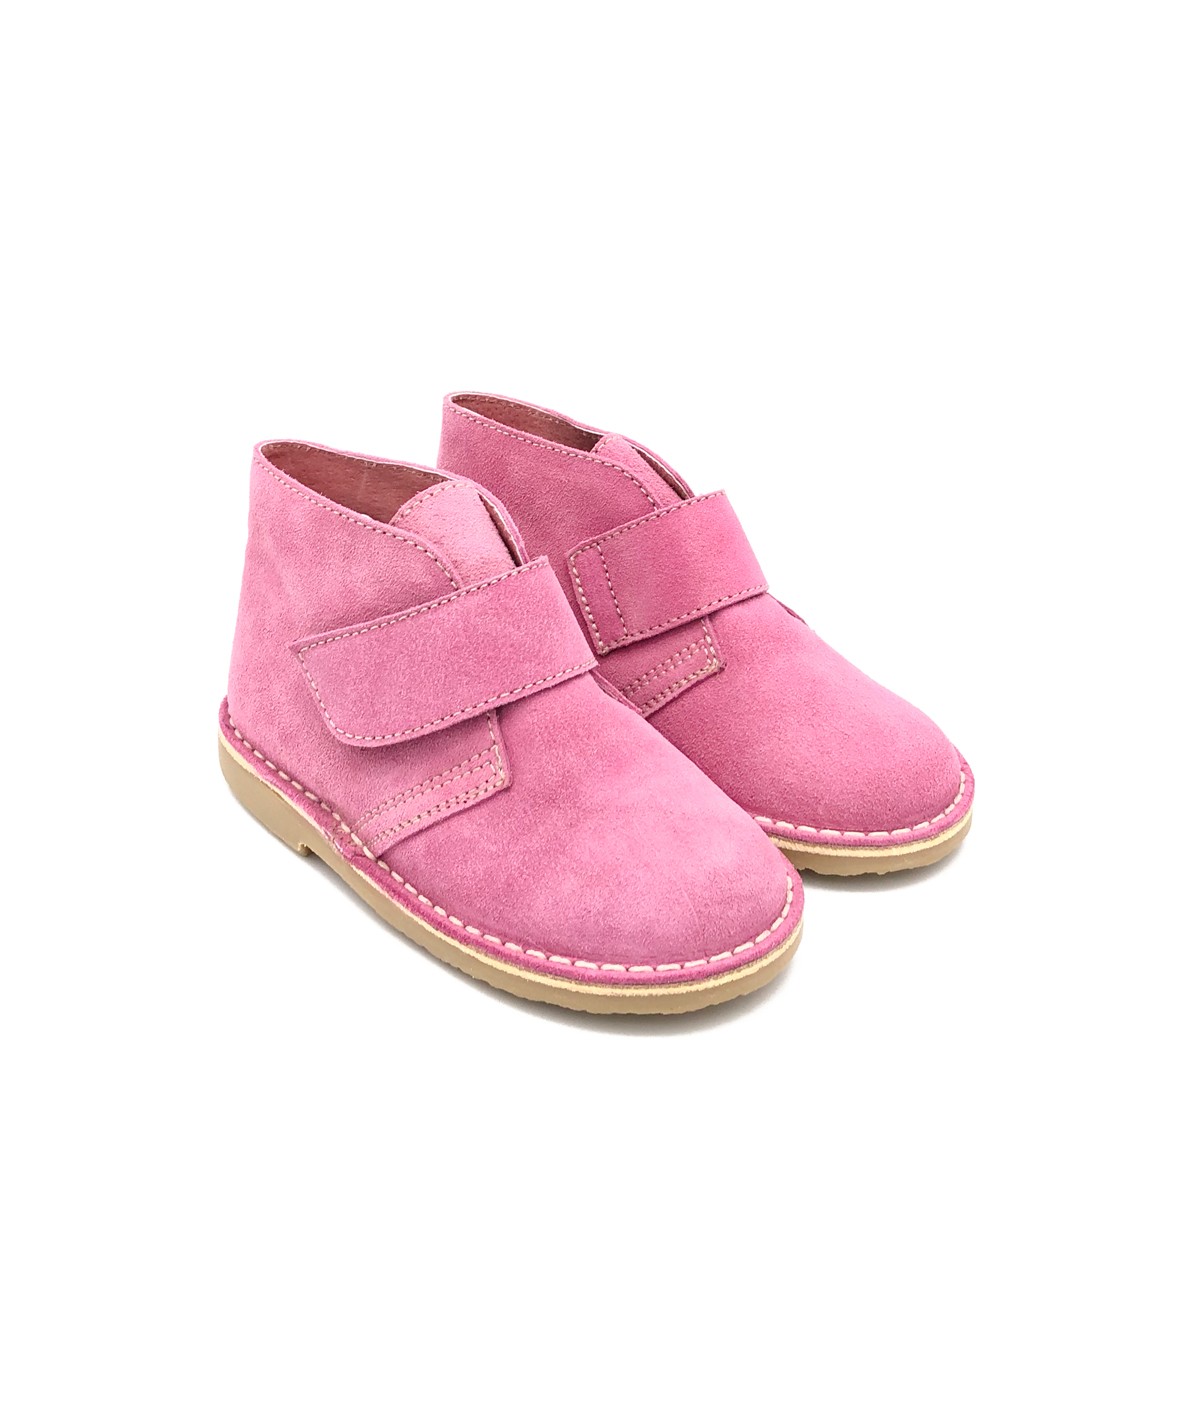 Pink Desert or chukka boots for girls.